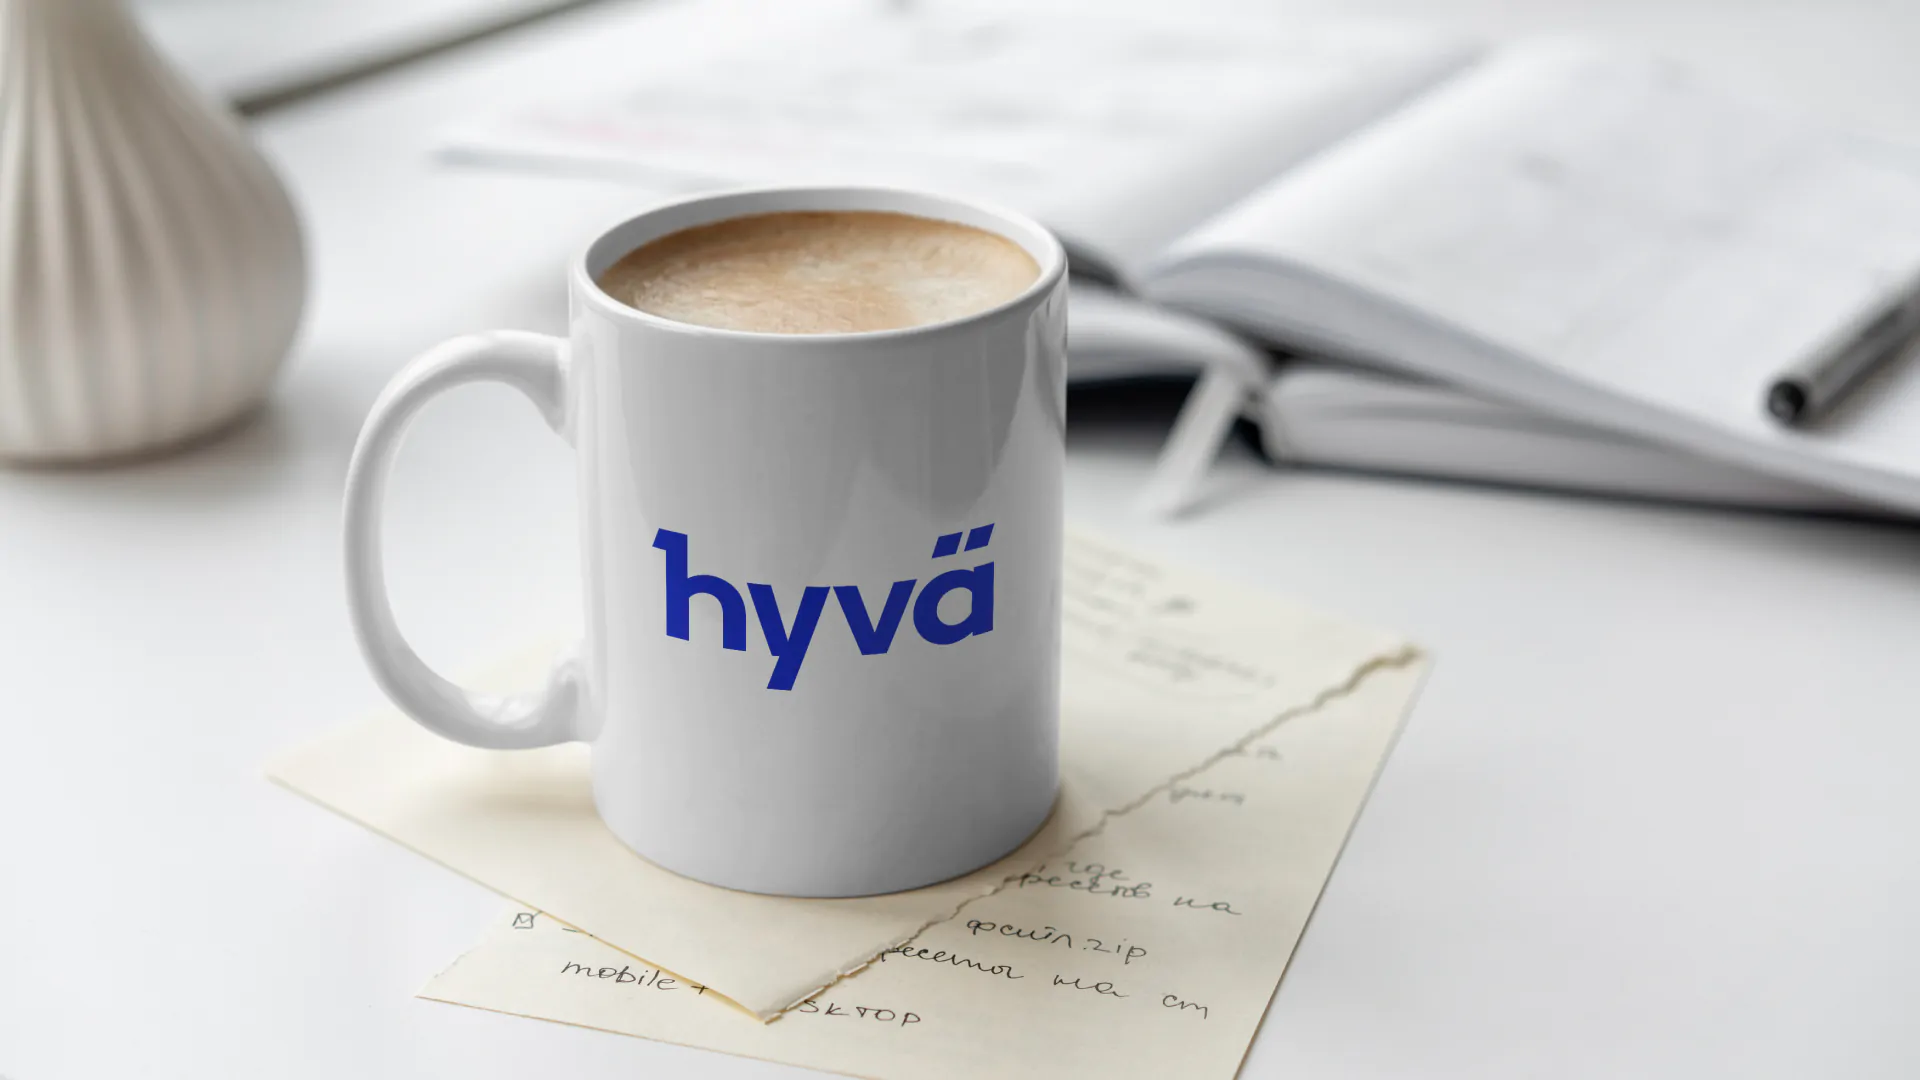 Image of coffee mug with "hyvä" on it